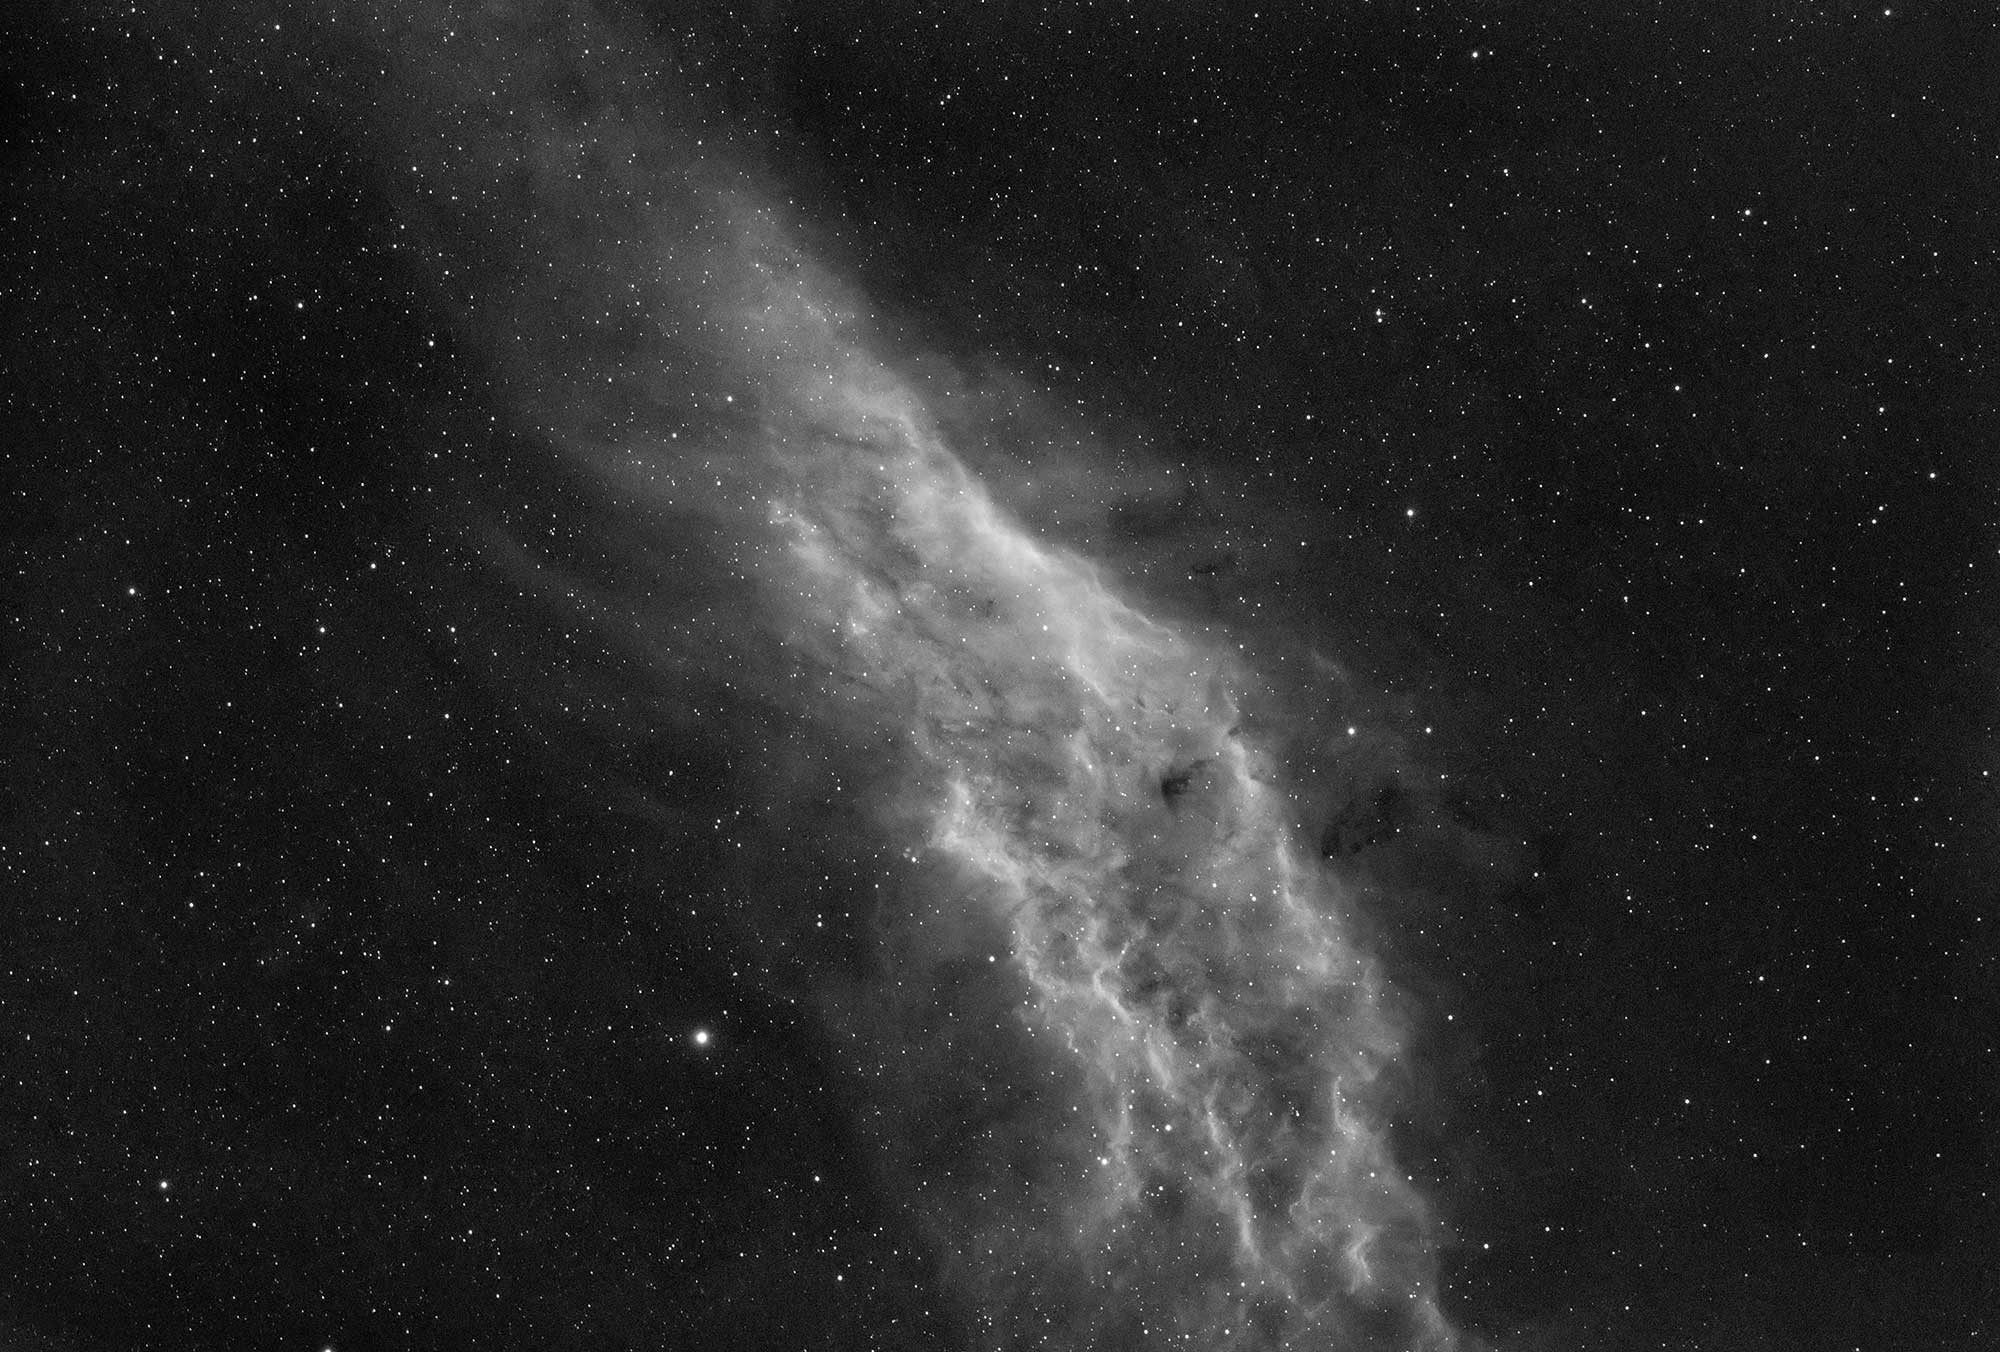 California Nebula in hydrogen alpha using the Borg55FL